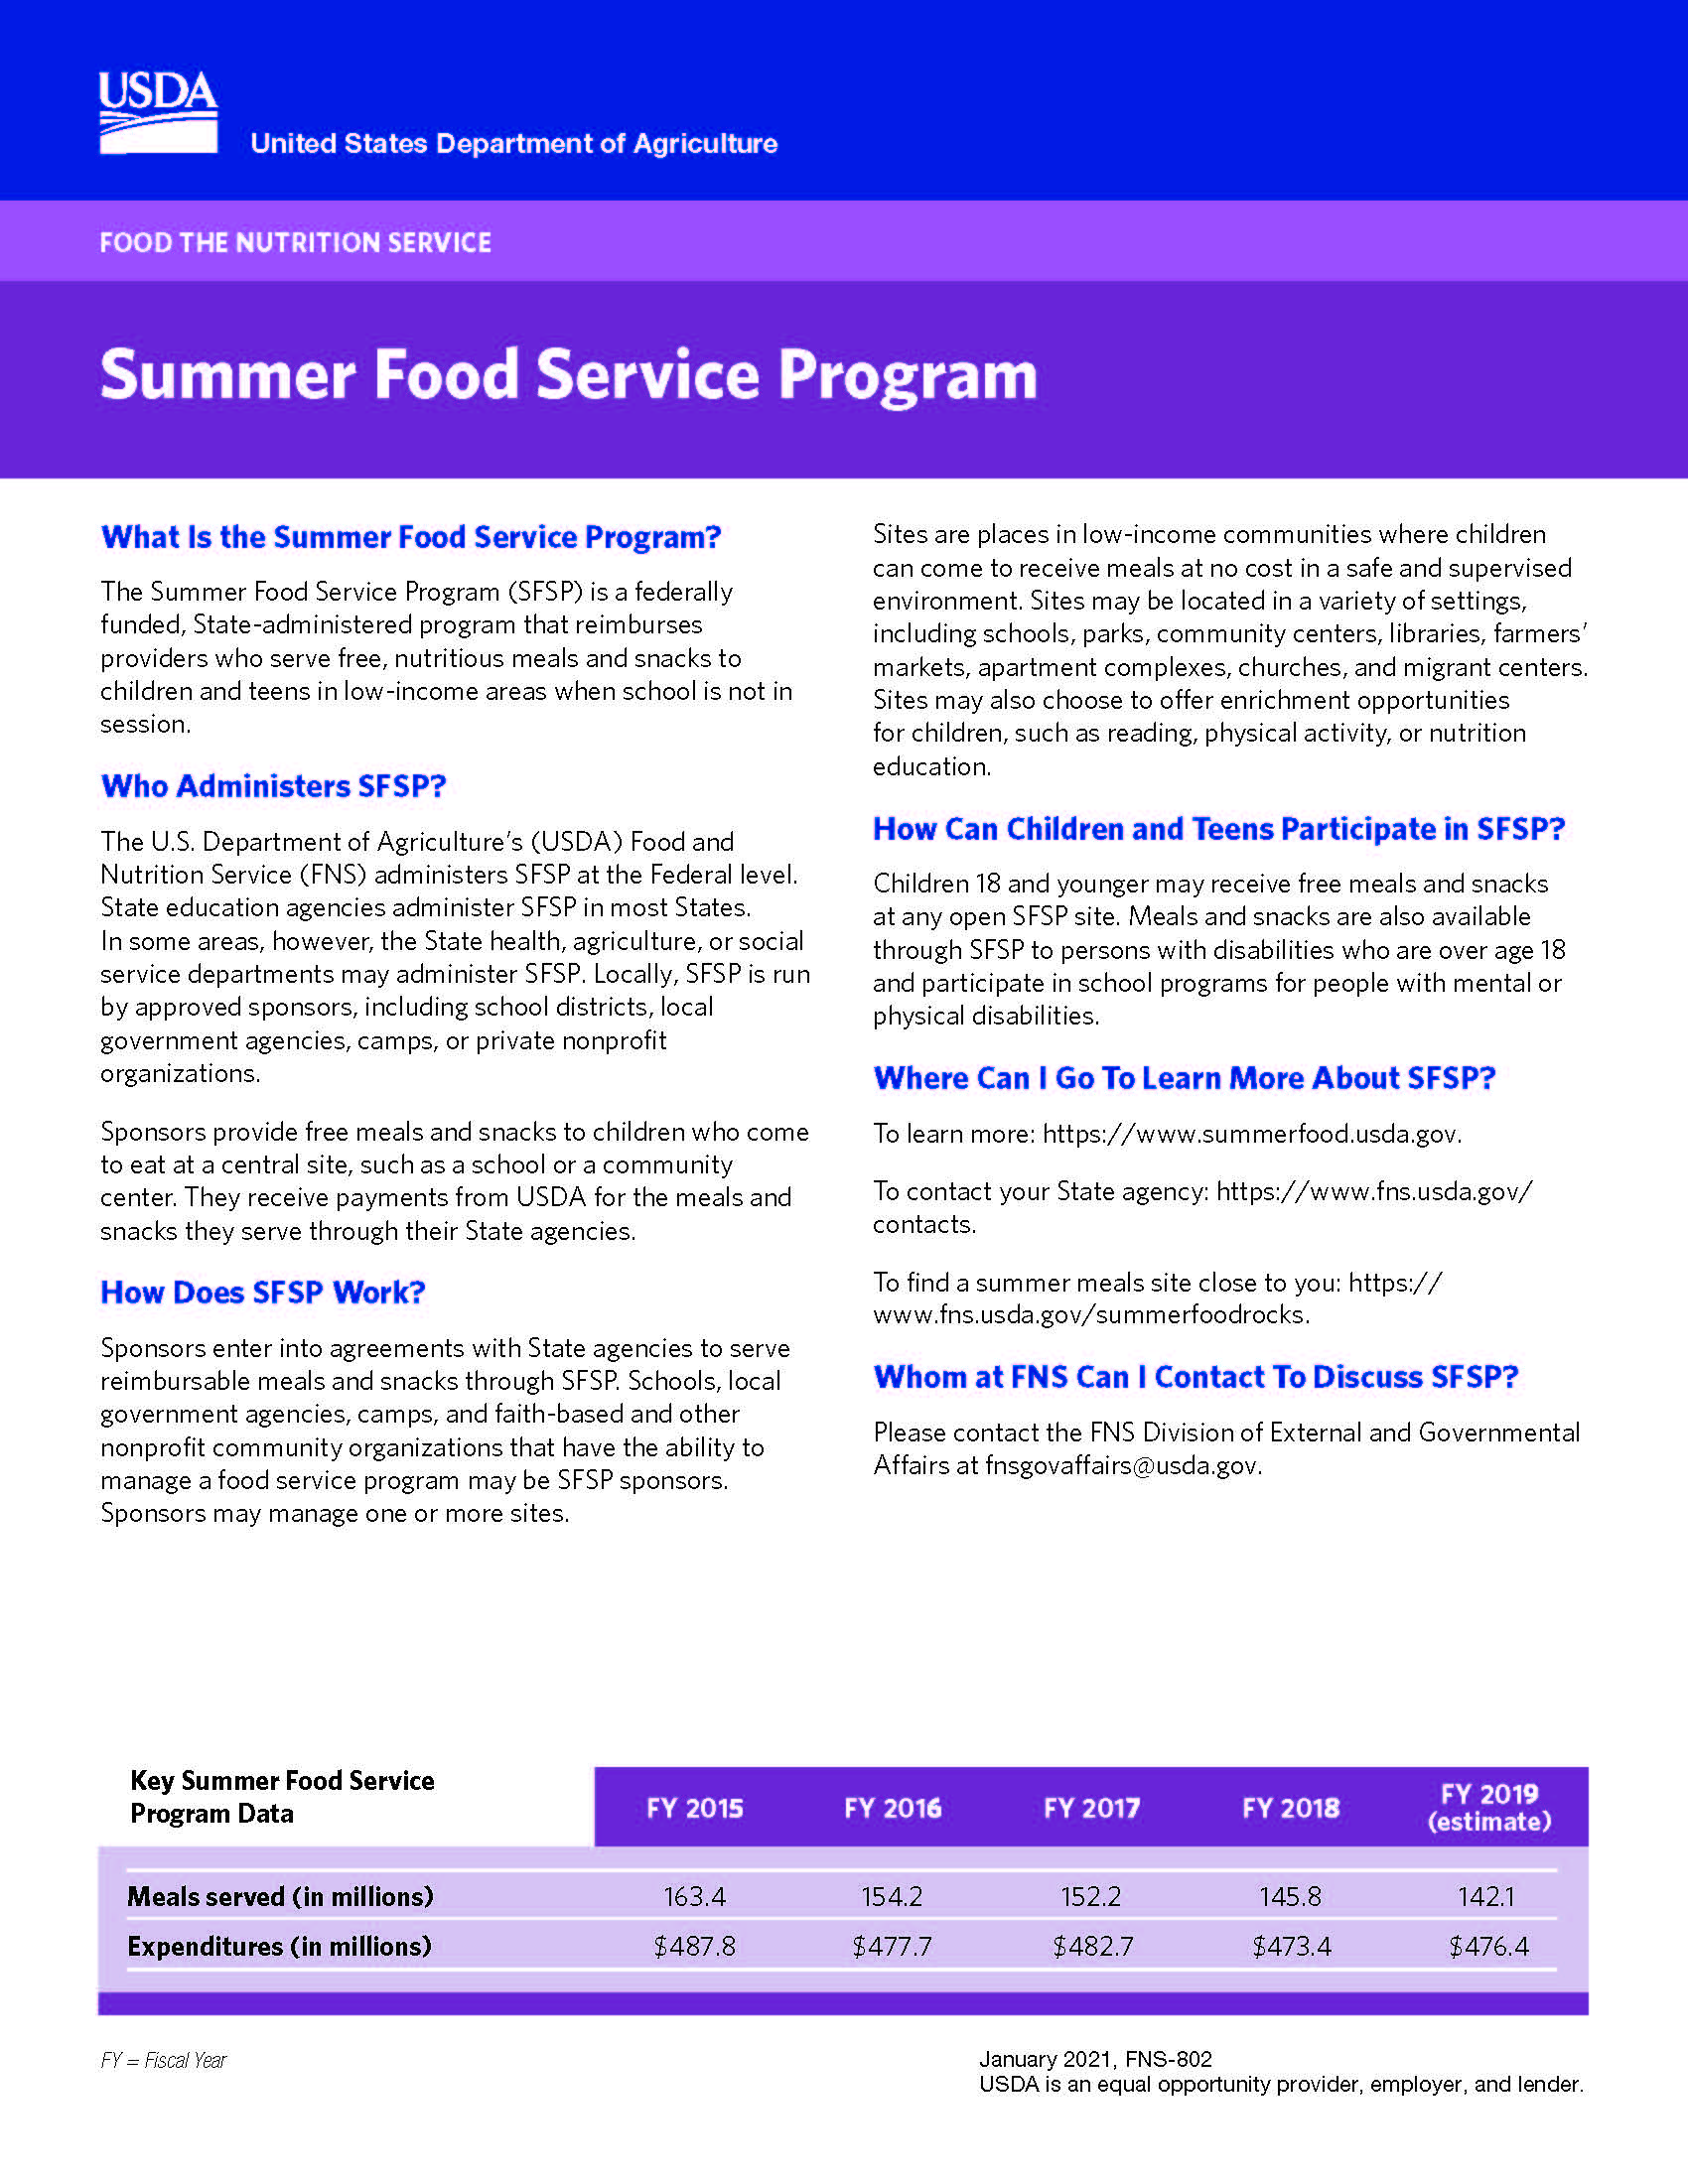 Summer Food Service Program flyer